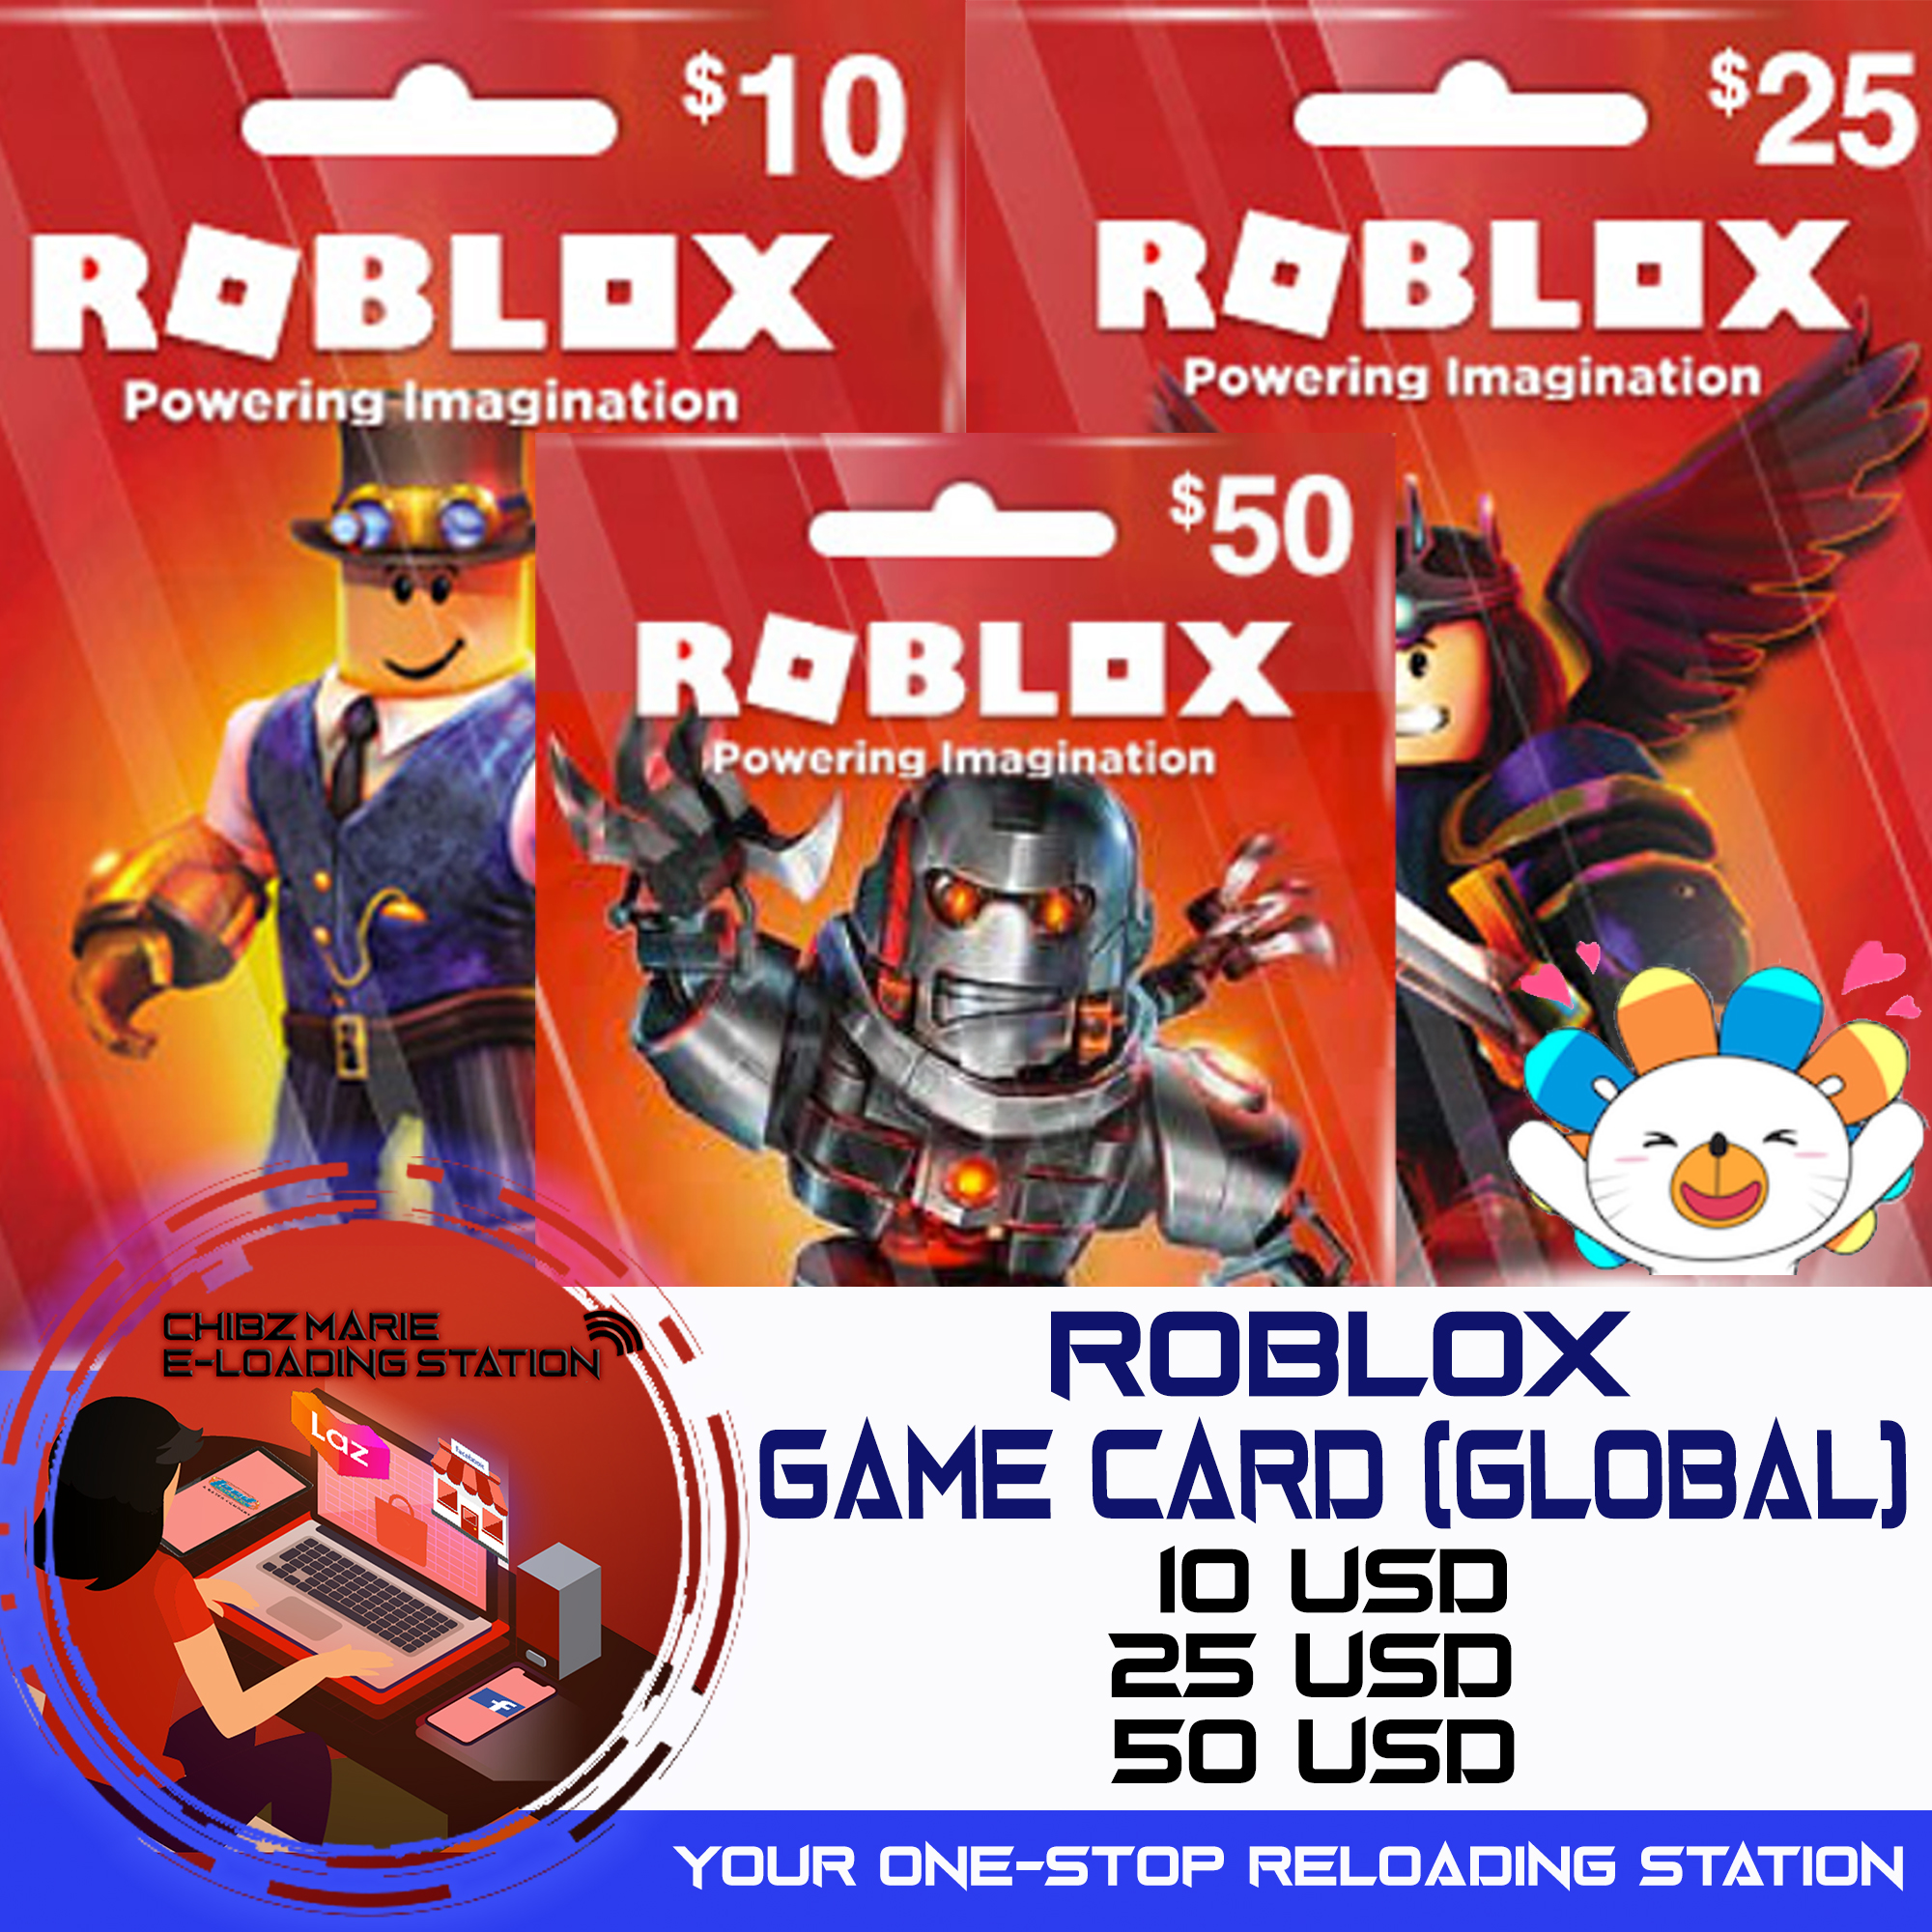 Robux Card Price Voucher Jul 2021 Biggo Philippines - robux price list philippines